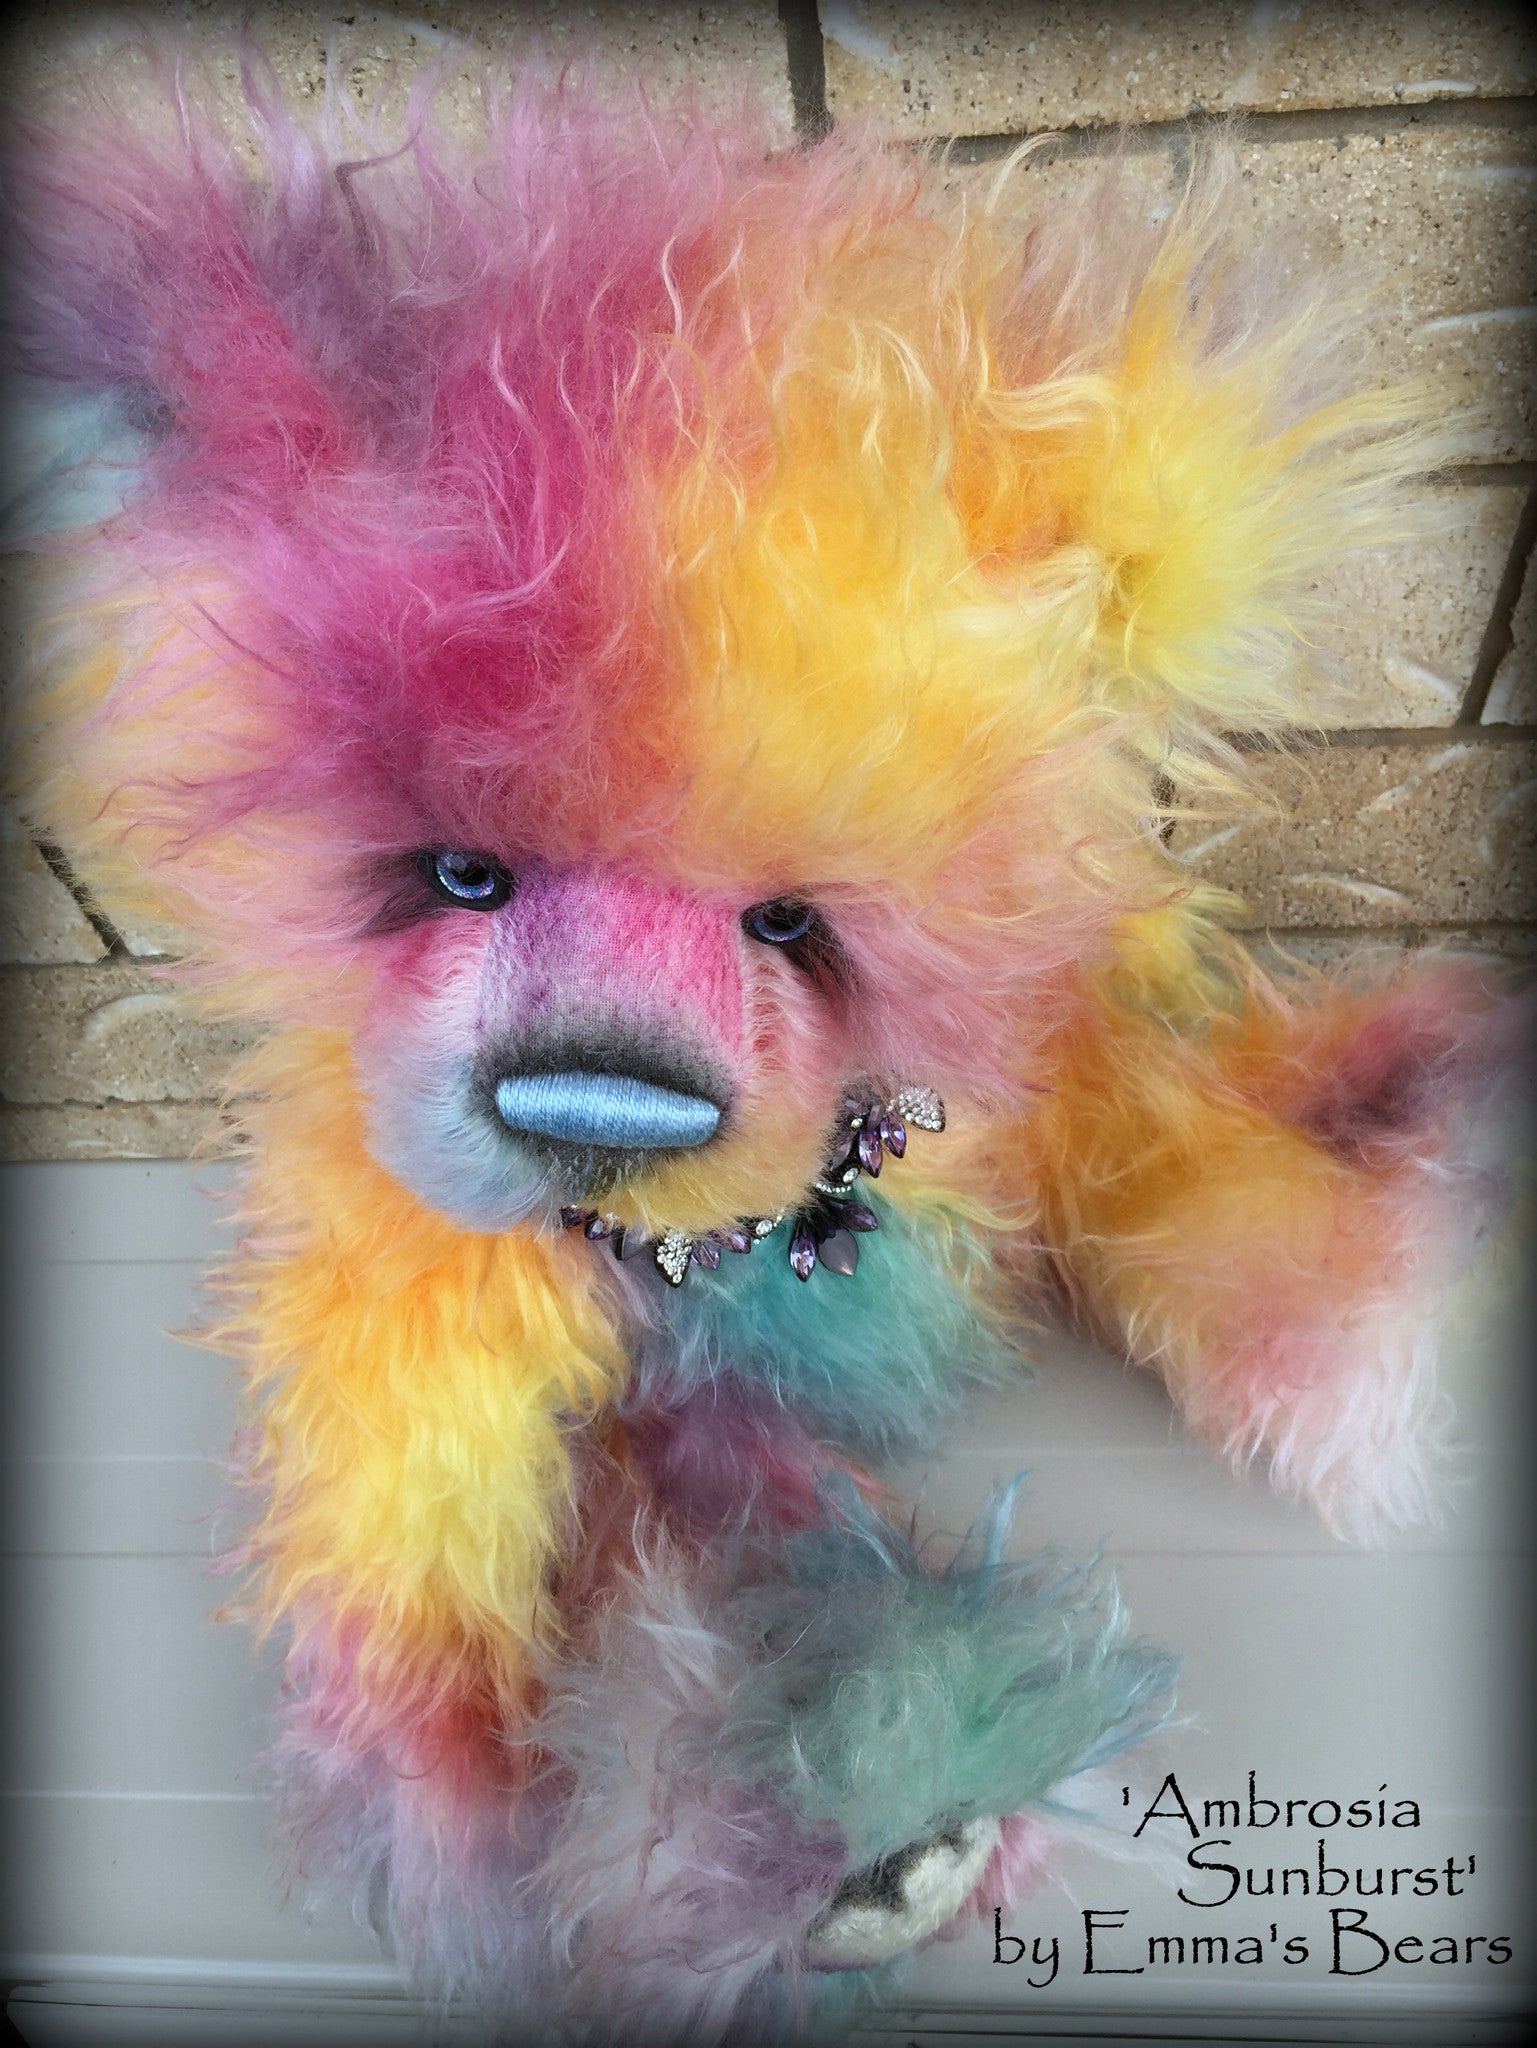 Ambrosia Sunburst - 23IN hand dyed rainbow mohair bear by Emmas Bears - OOAK